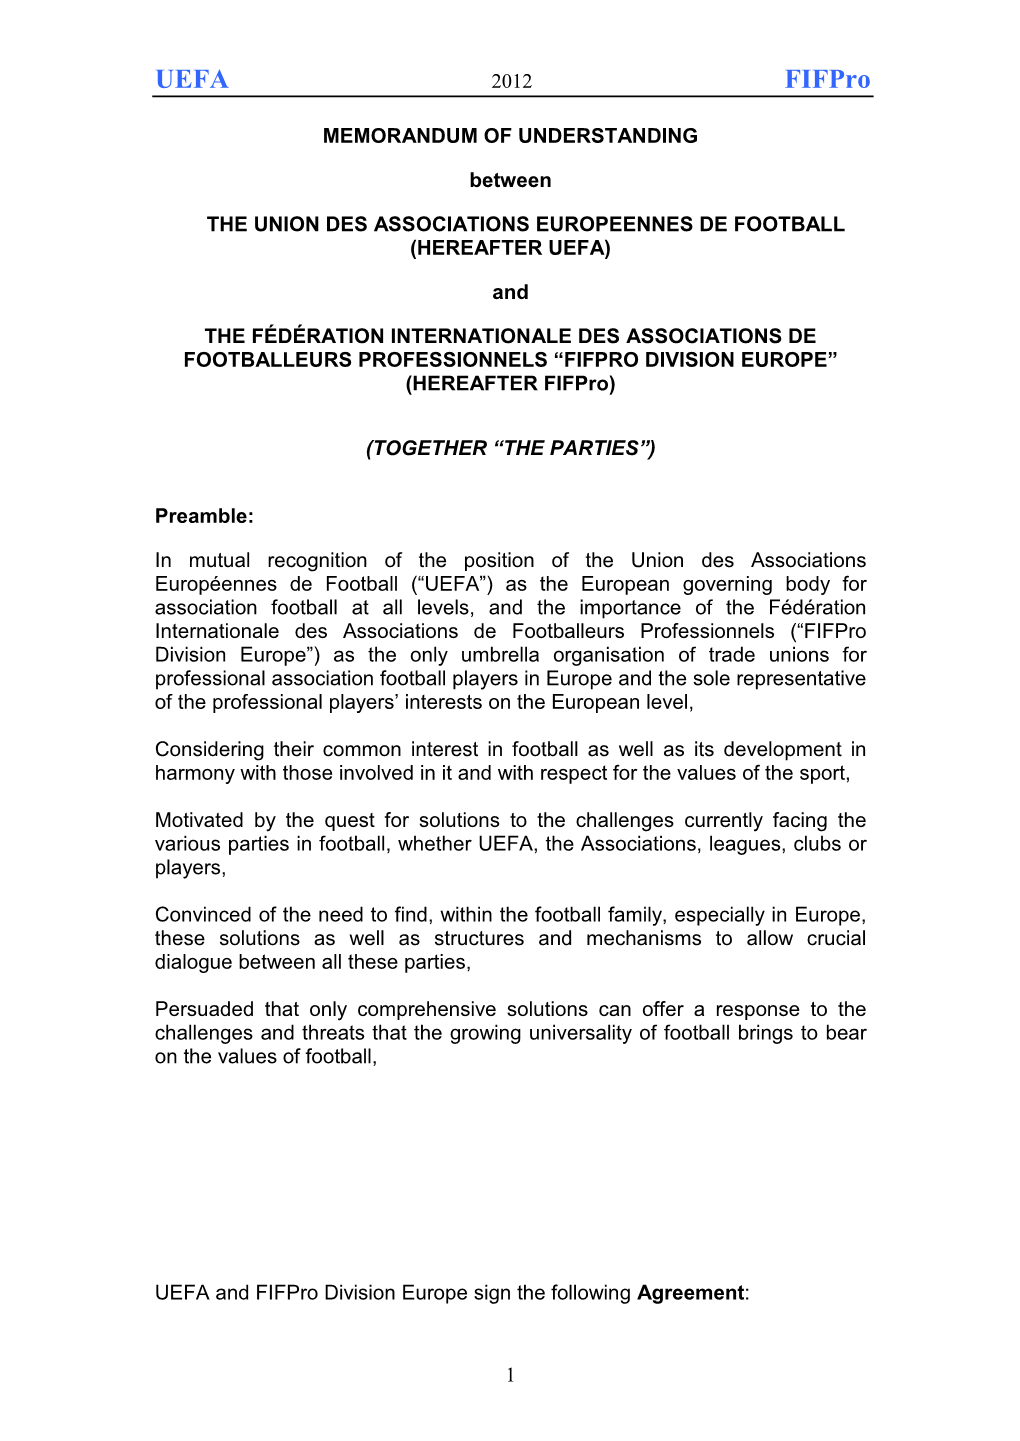 Memorandum of Understanding UEFA/Fifpro Division Europe